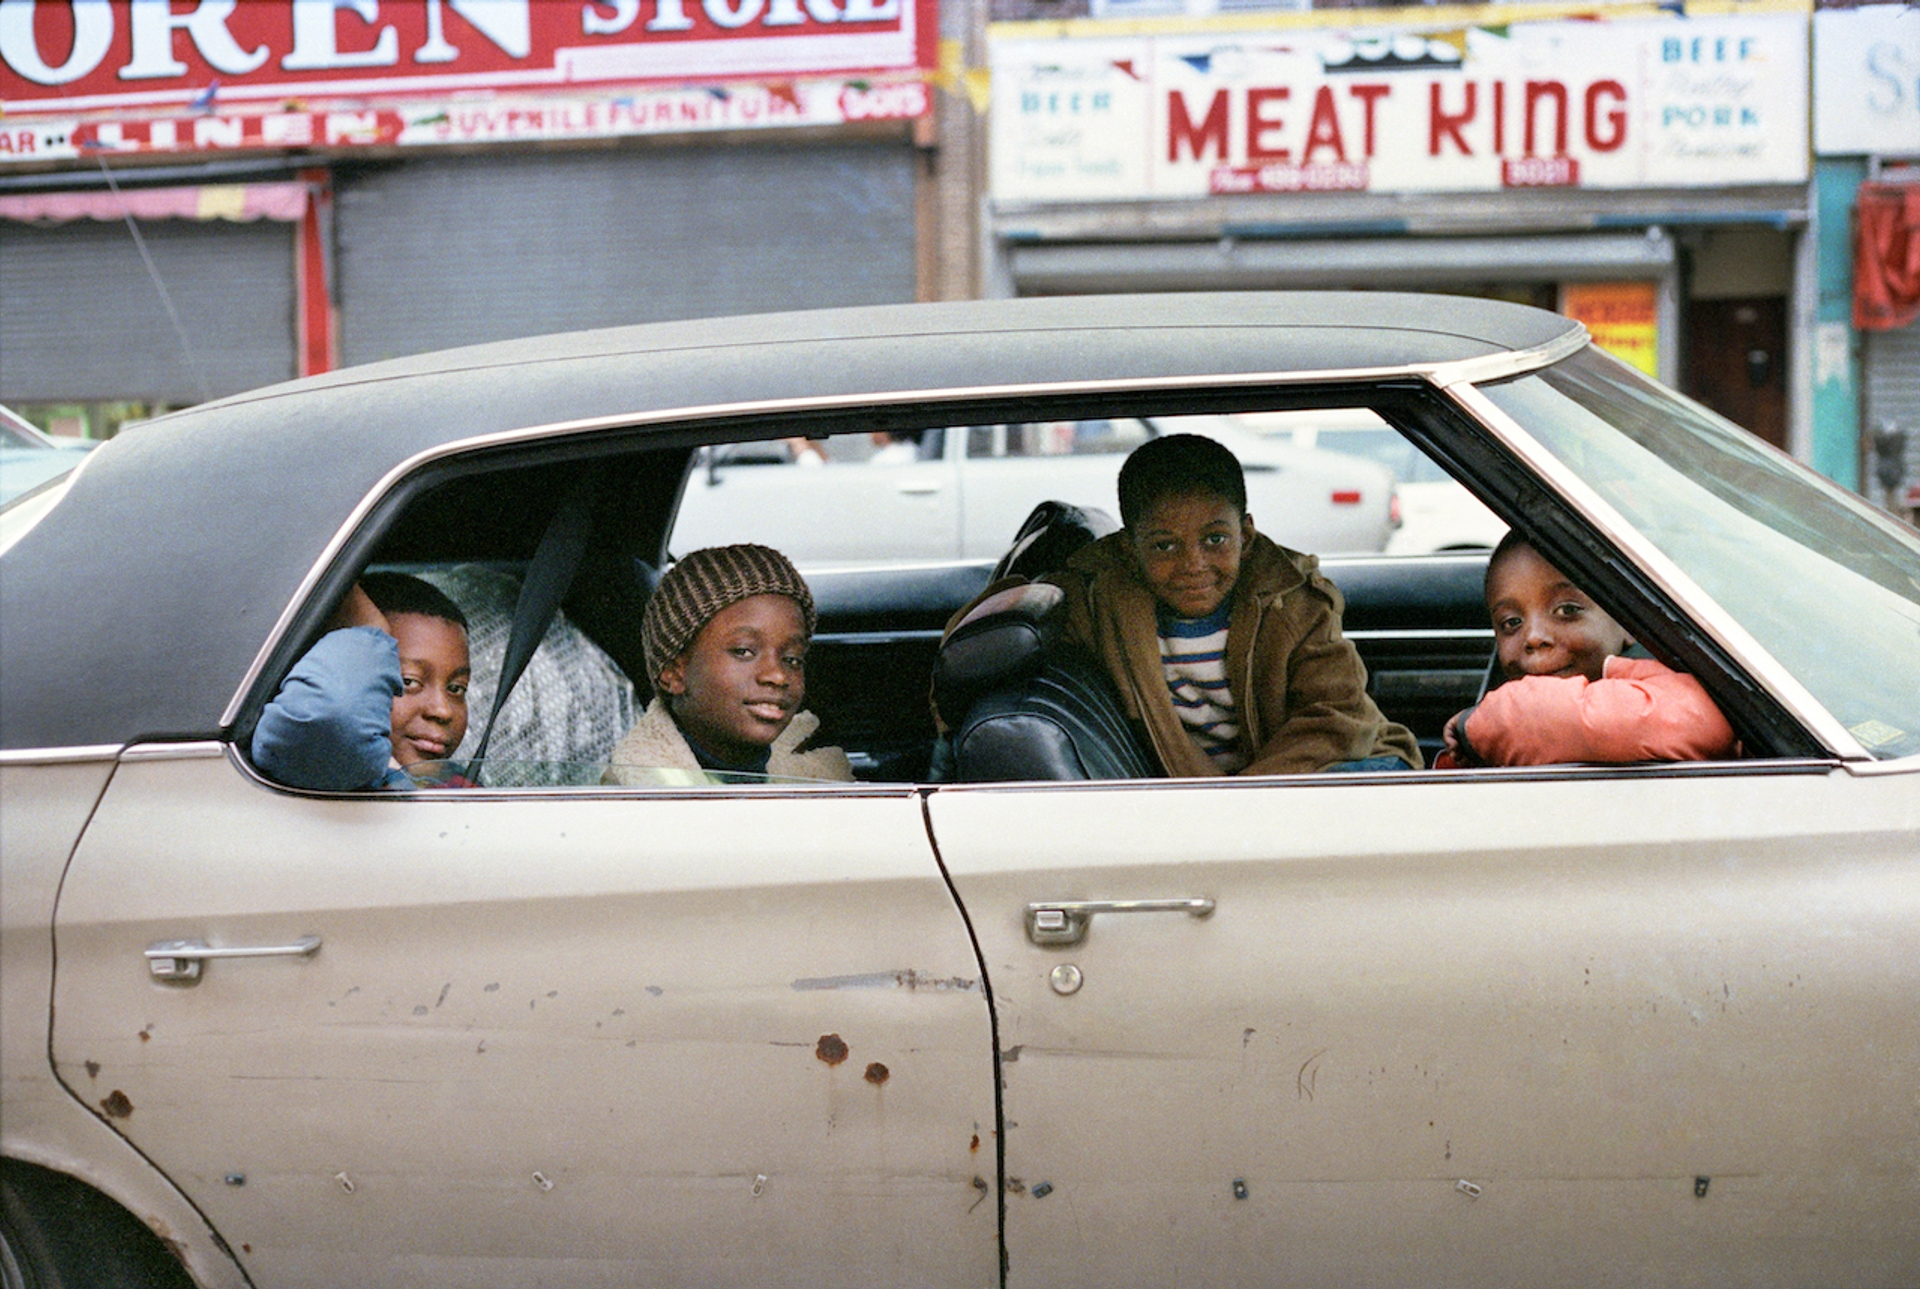 Jamel Shabazz, Joy Riding, Flatbush, Brooklyn, 1980. Courtesy of the artist.